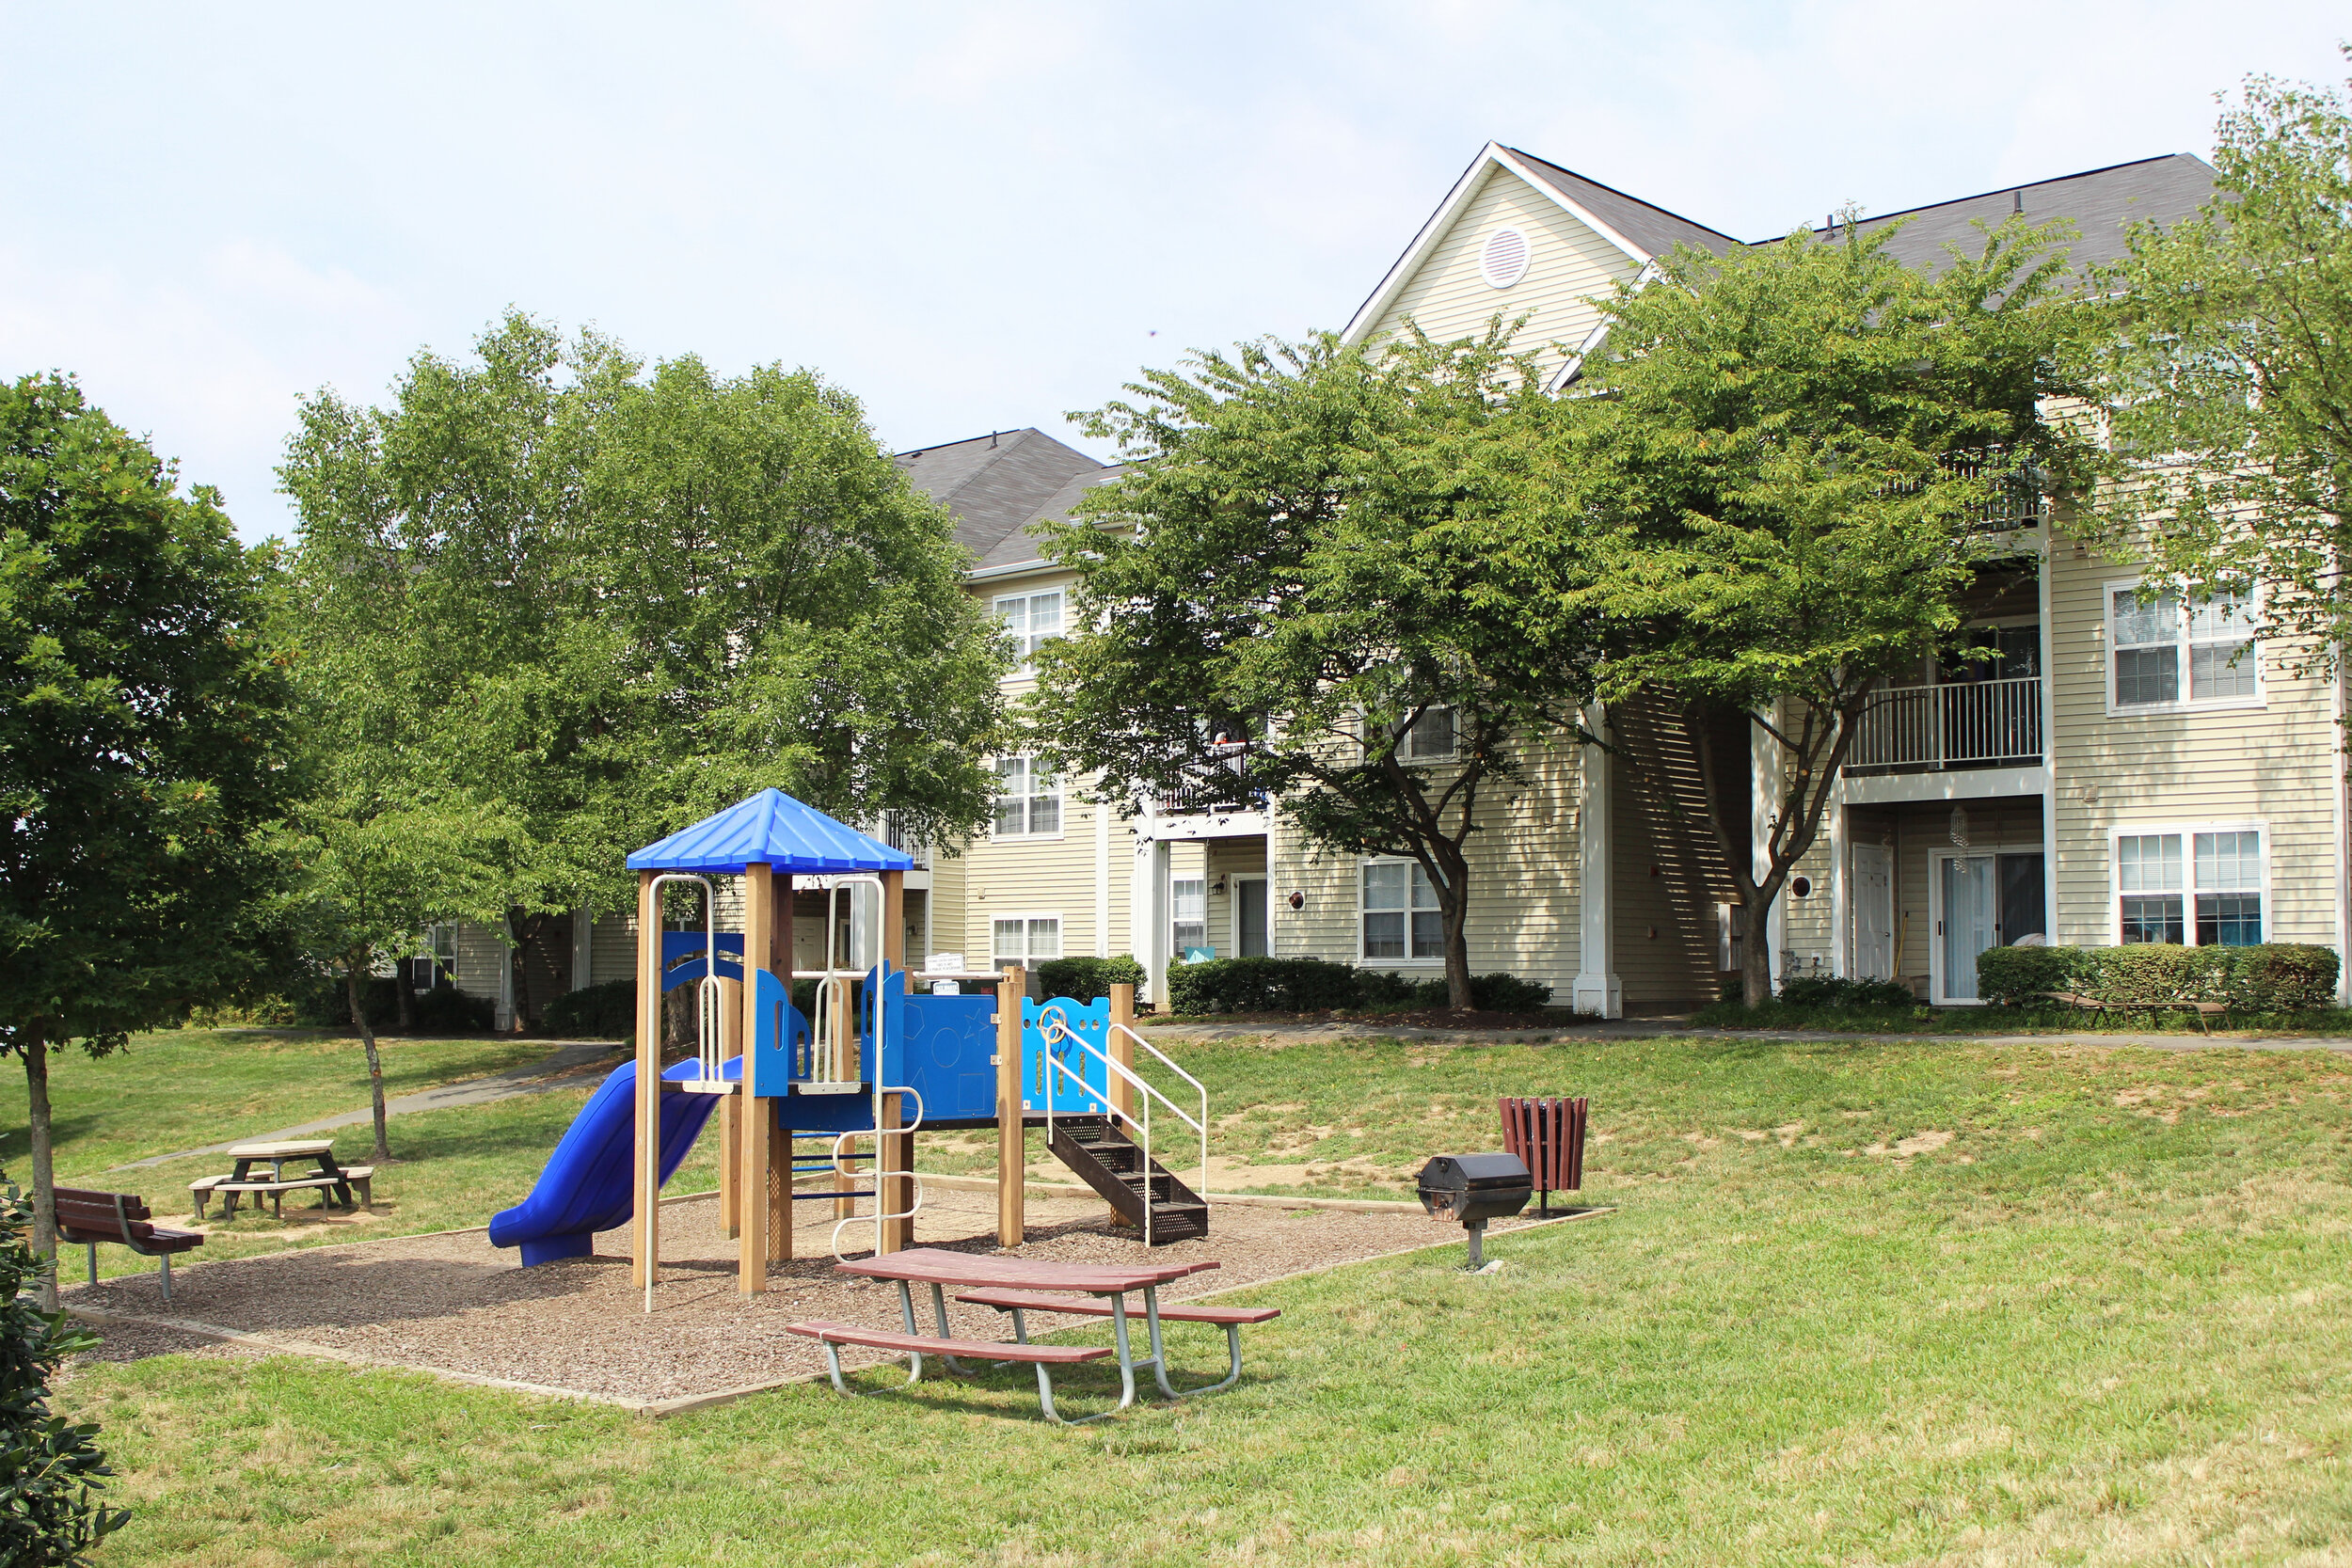  Family-friendly affordable housing community in Leesburg, VA. 